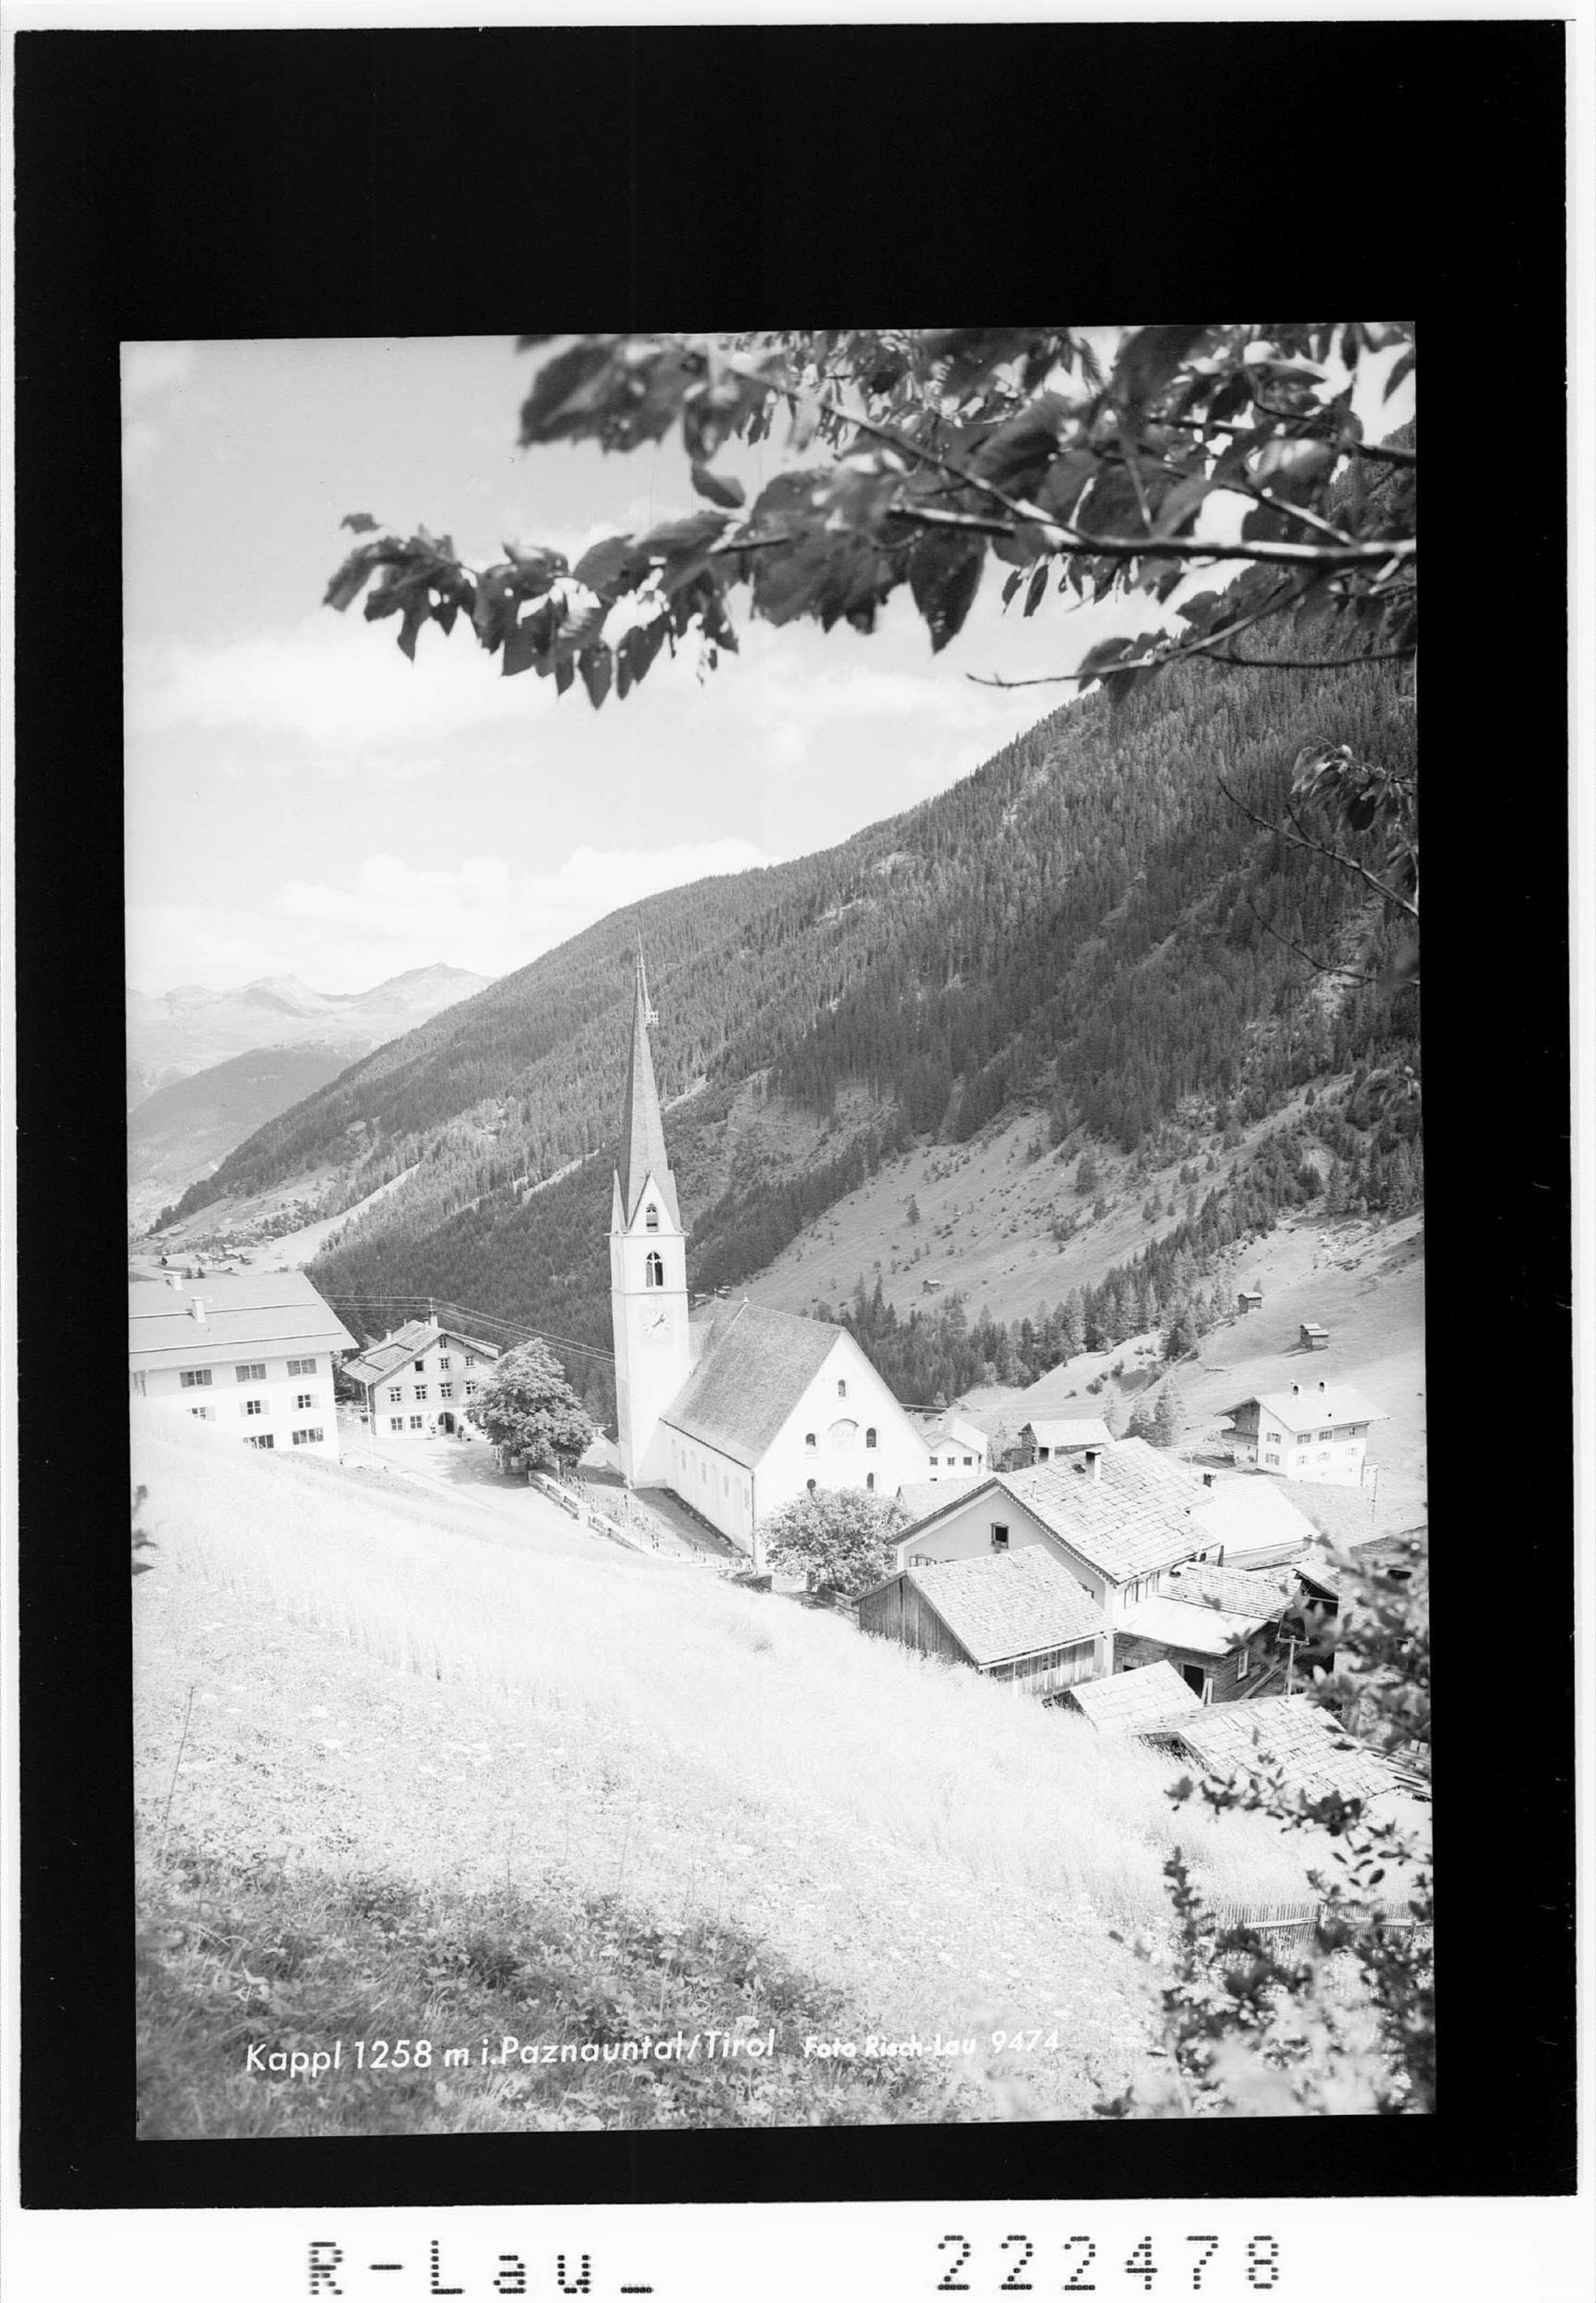 Kappl 1258 m im Paznauntal / Tirol></div>


    <hr>
    <div class=